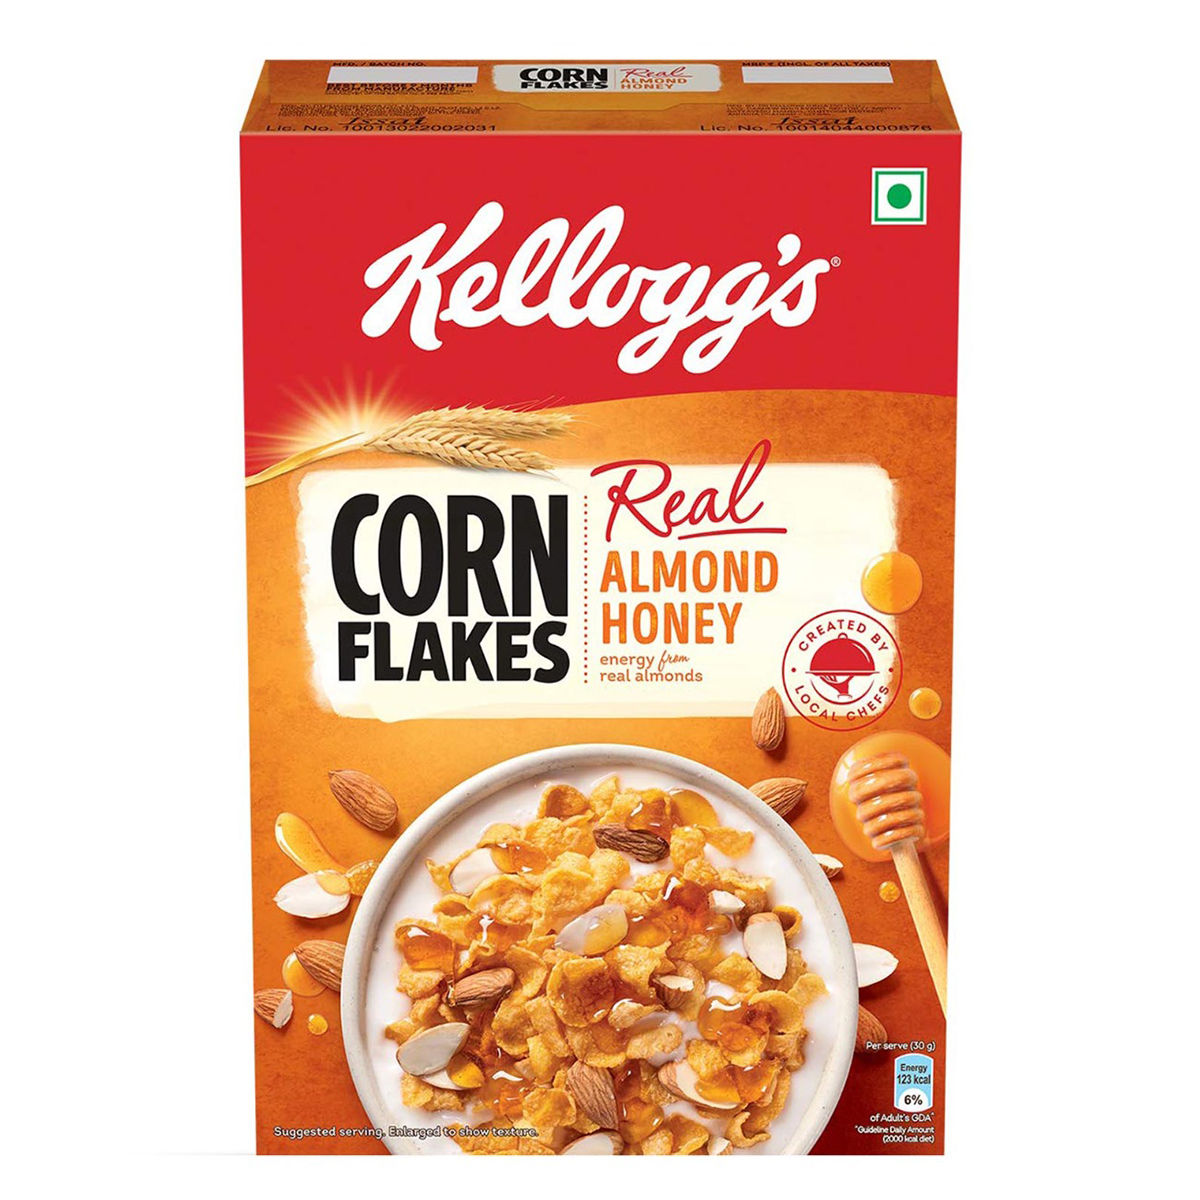 Buy Kellogg's Real Almond Honey Corn Flakes, 300 gm Online